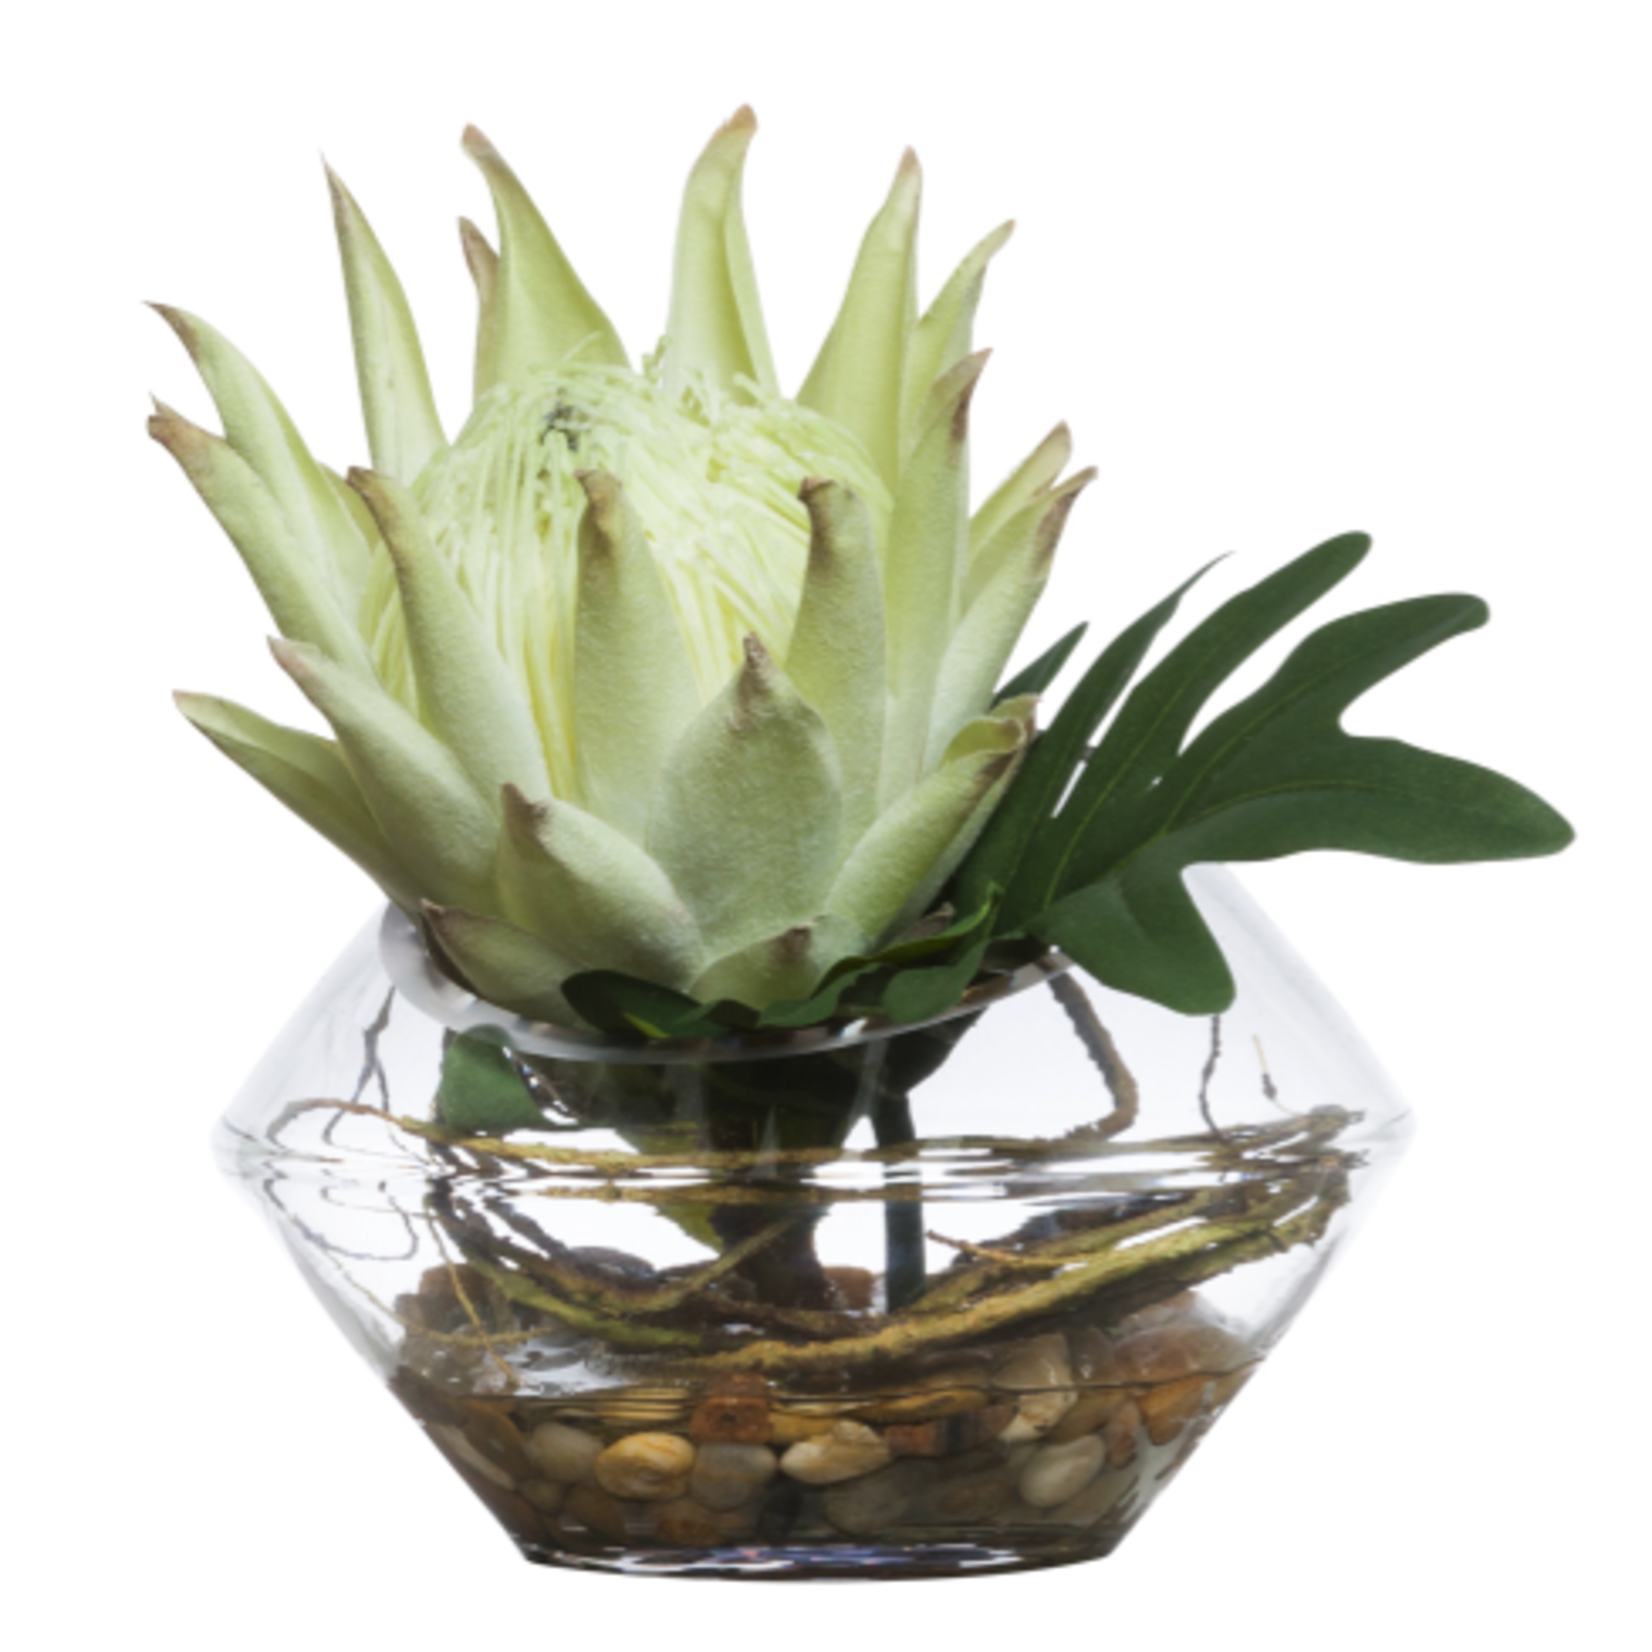 Outside The Box 9" Cream & Green Protea Mini Selloum Leaf In Water-like Vase